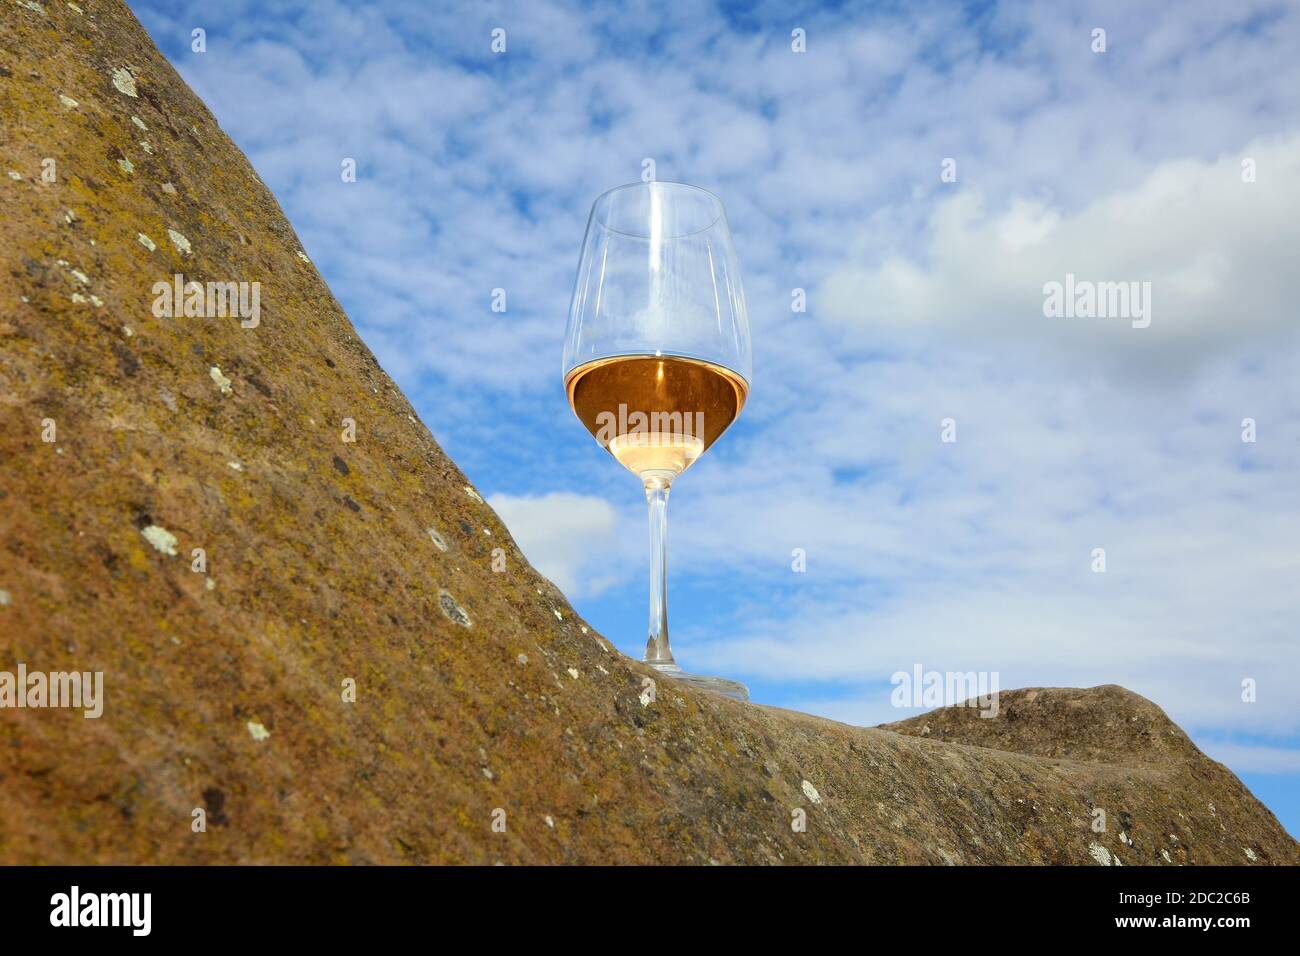 wine glass with rose wine Stock Photo